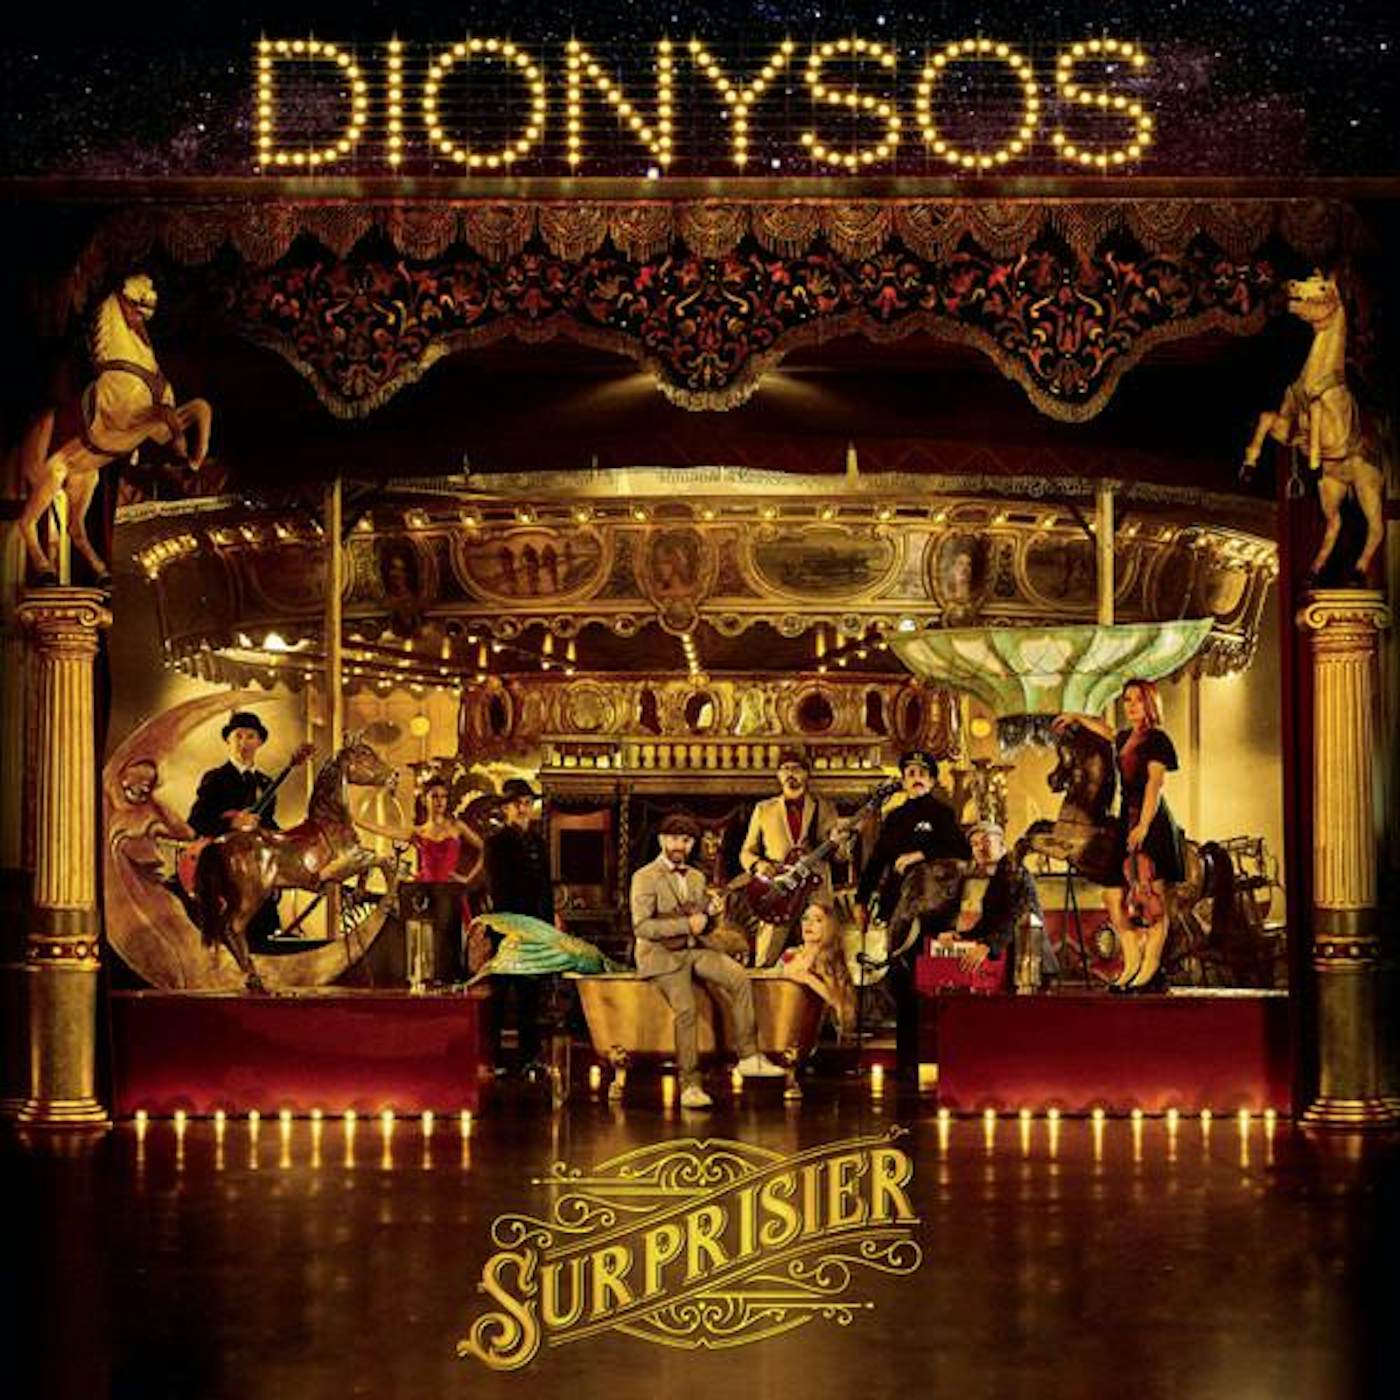 Dionysos SURPRISIER CD